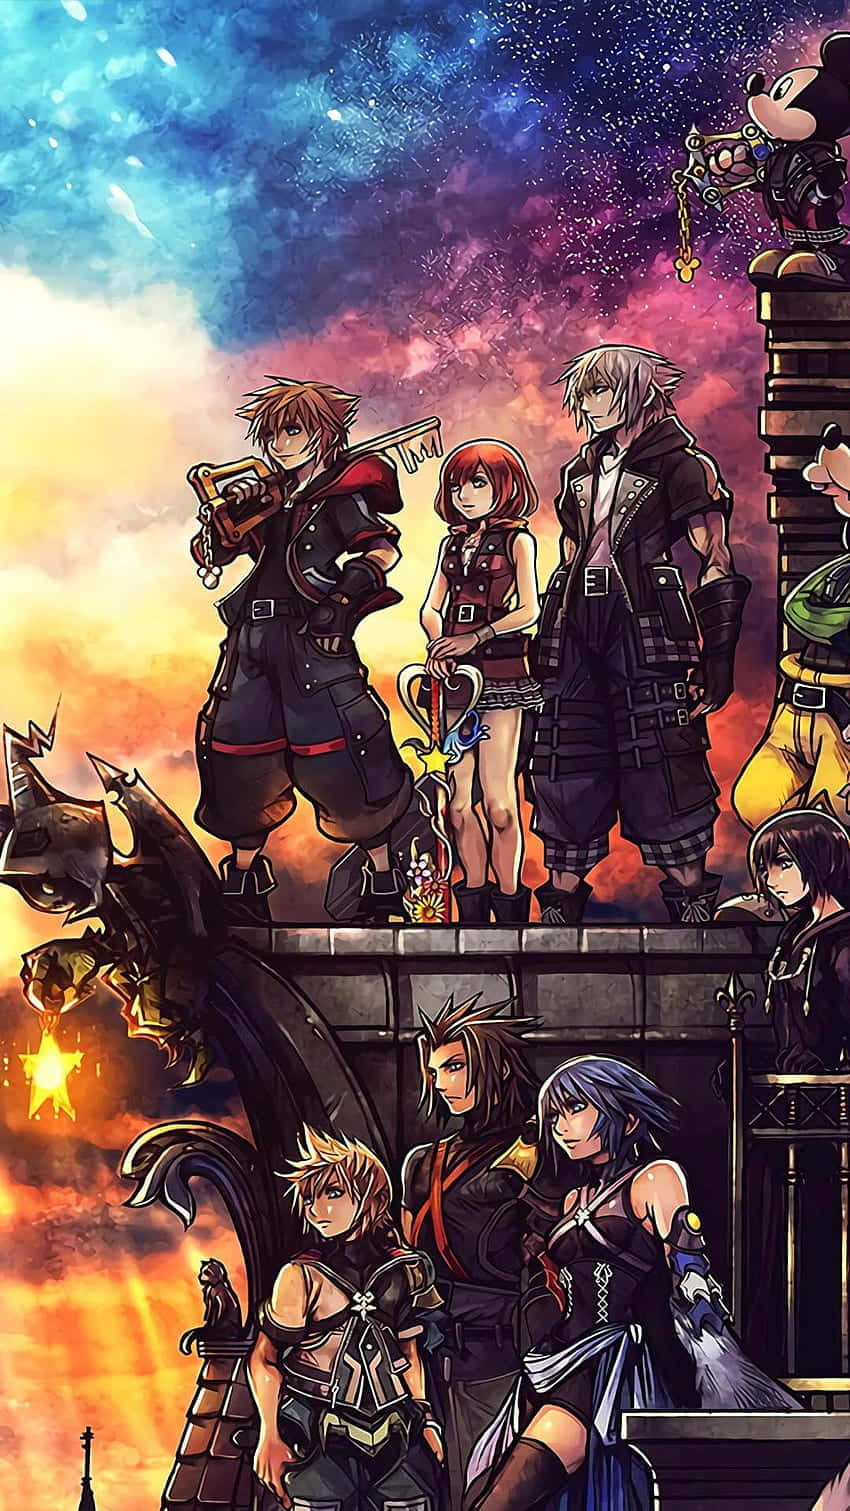 Kingdom Hearts Phone Wallpaper